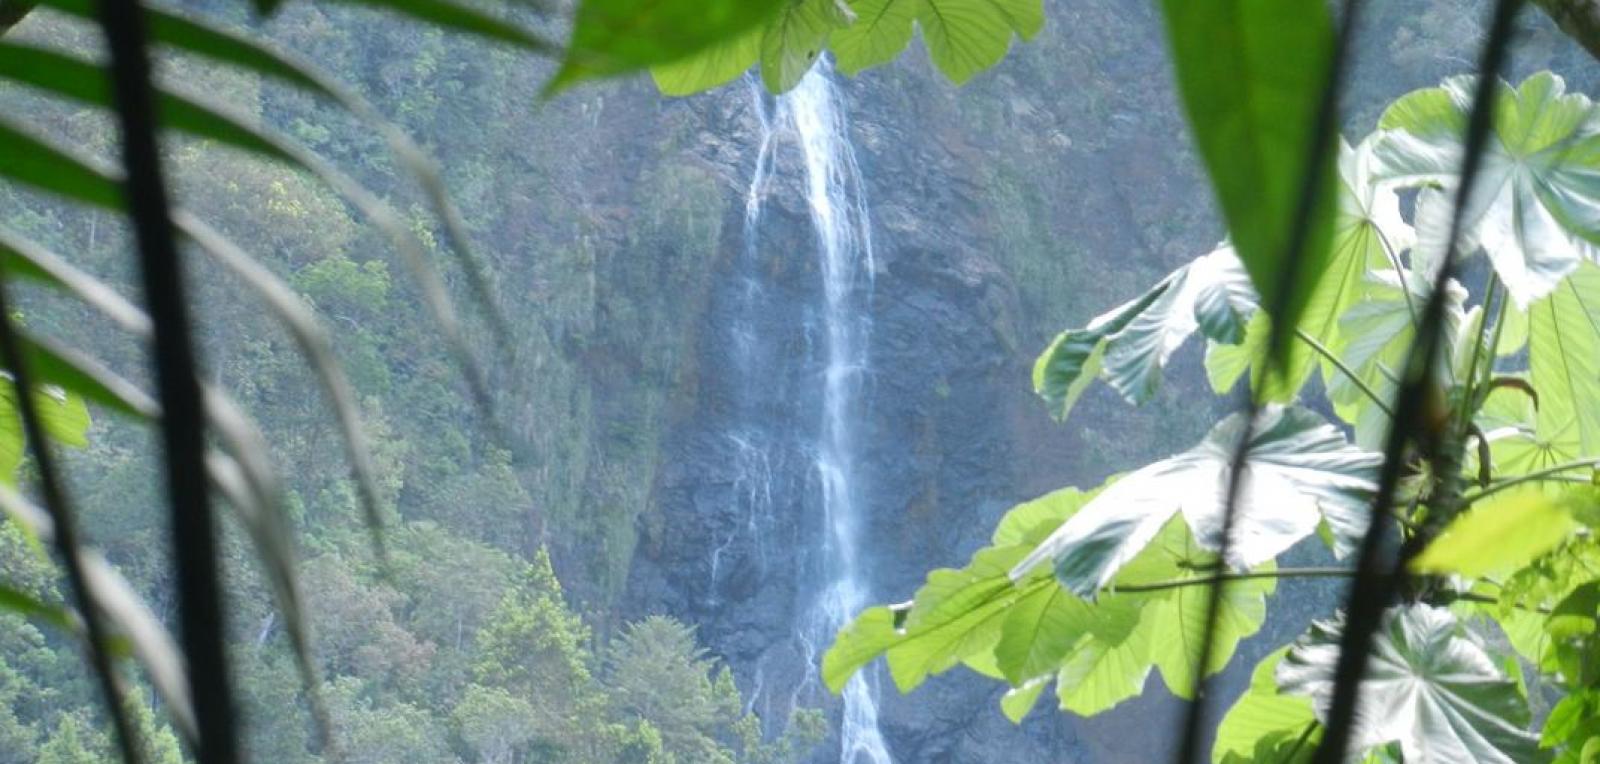 Nature: The peculiar Fine Waterfall